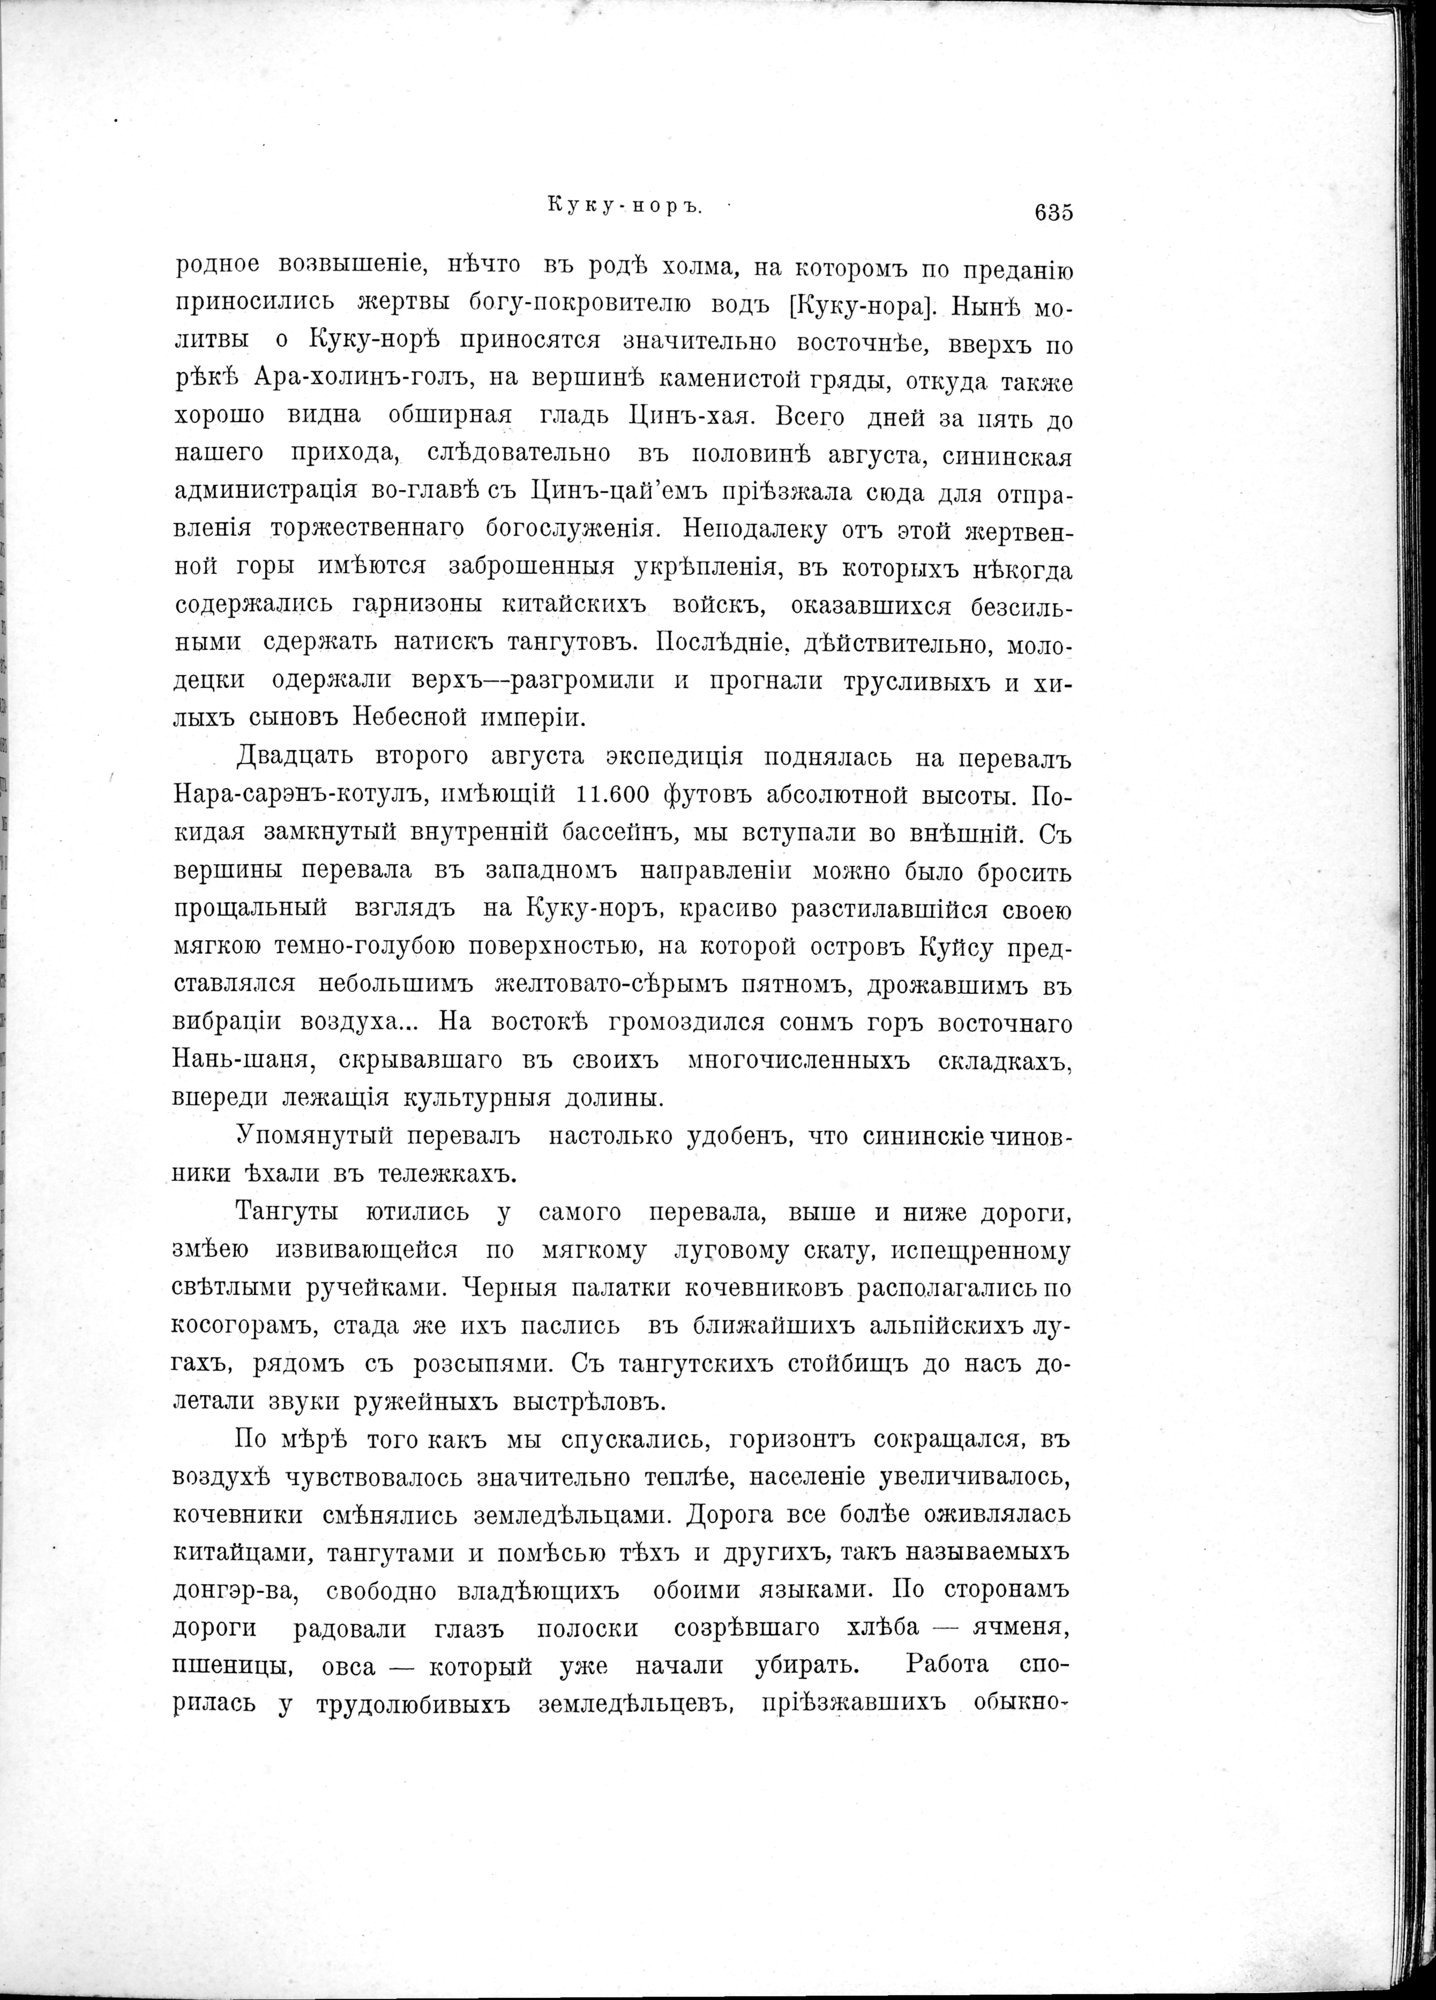 Mongoliia i Kam : vol.2 / Page 465 (Grayscale High Resolution Image)